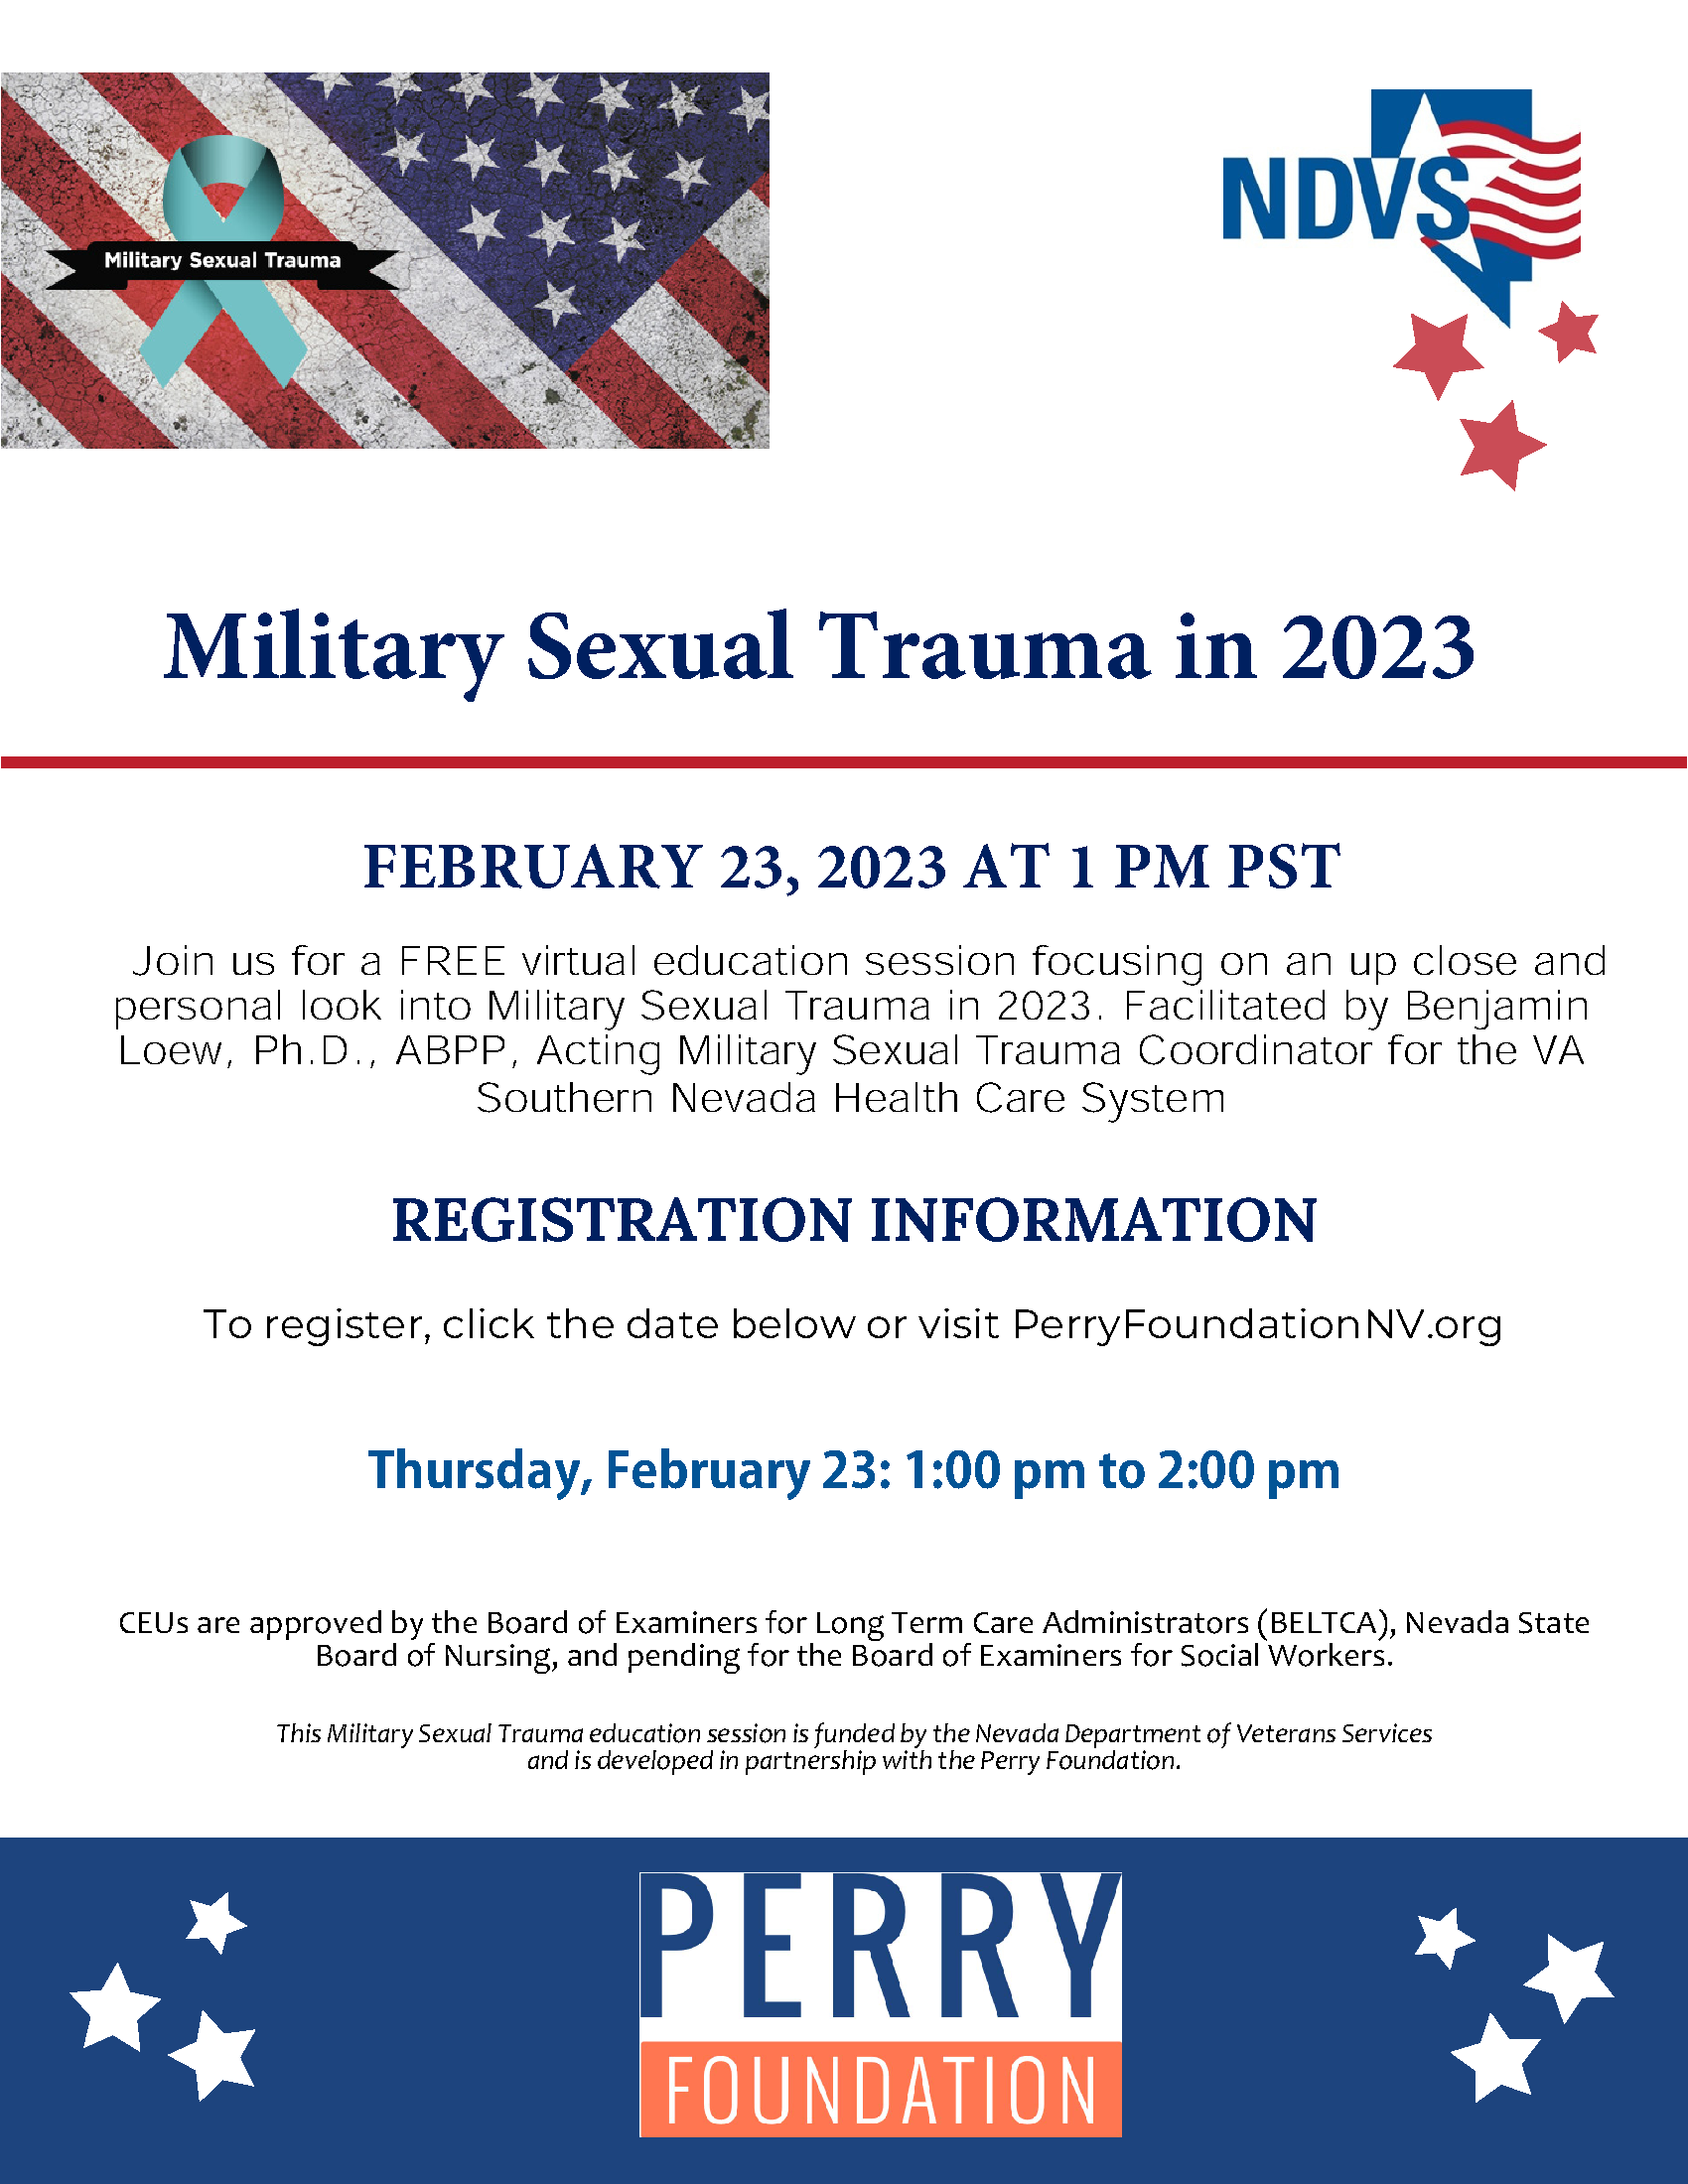 Military Sexual Trauma (MST): Part 1